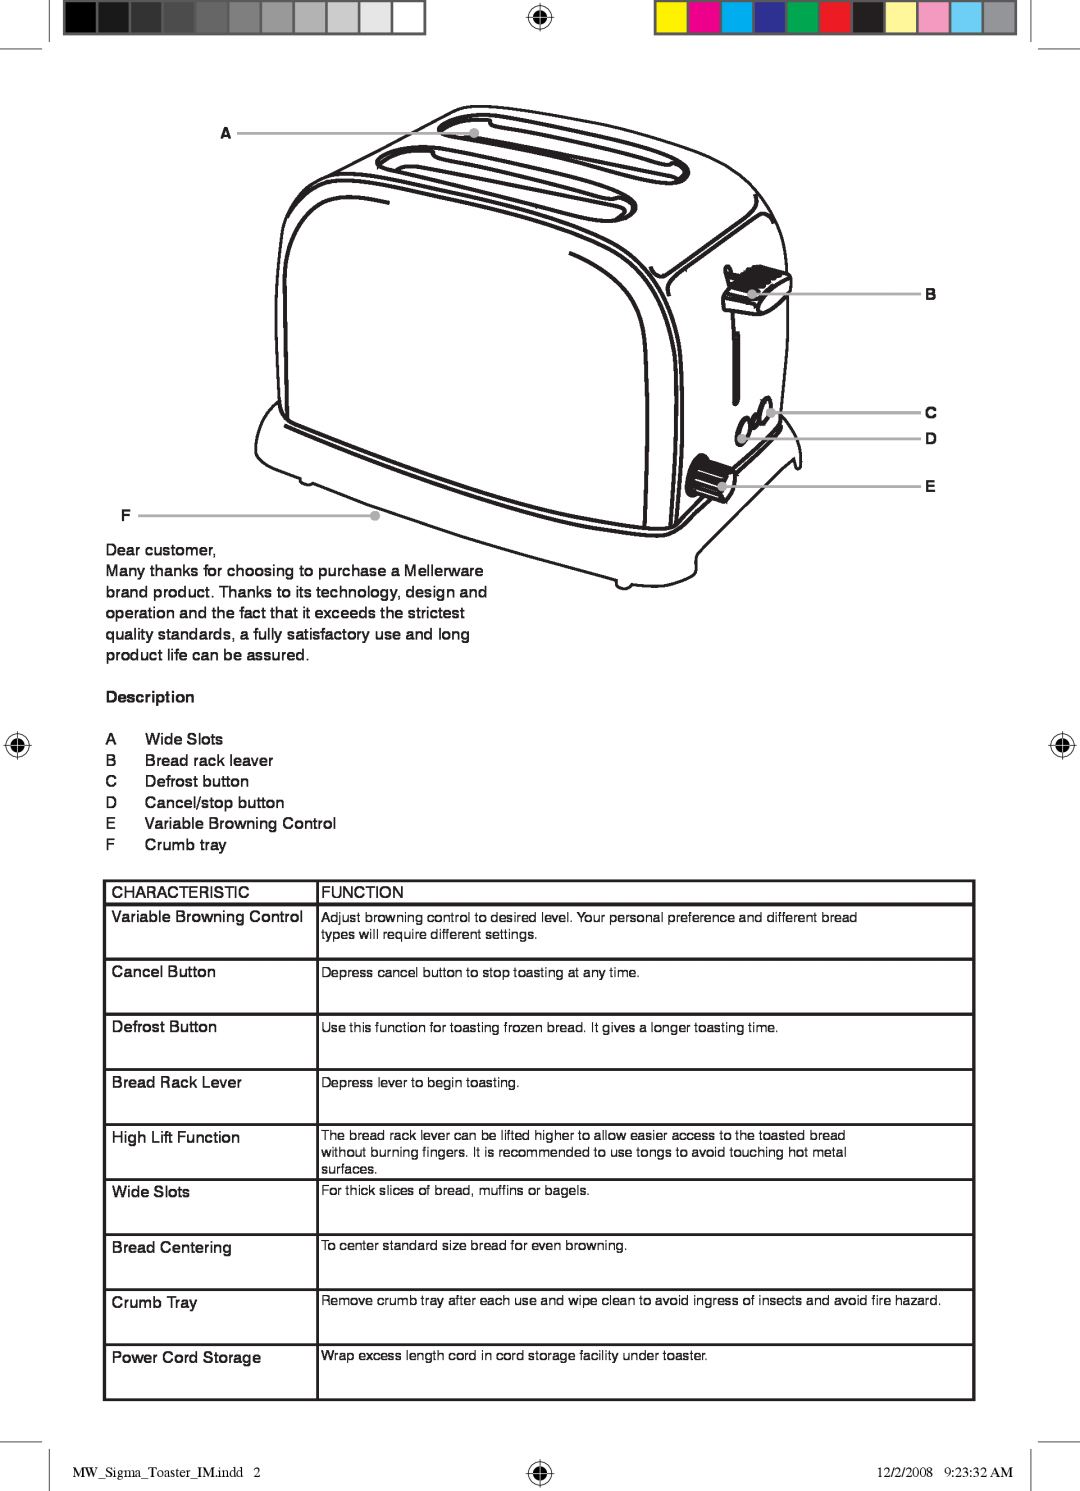 Mellerware 24107, 24101 specifications A B C D E F, Description 